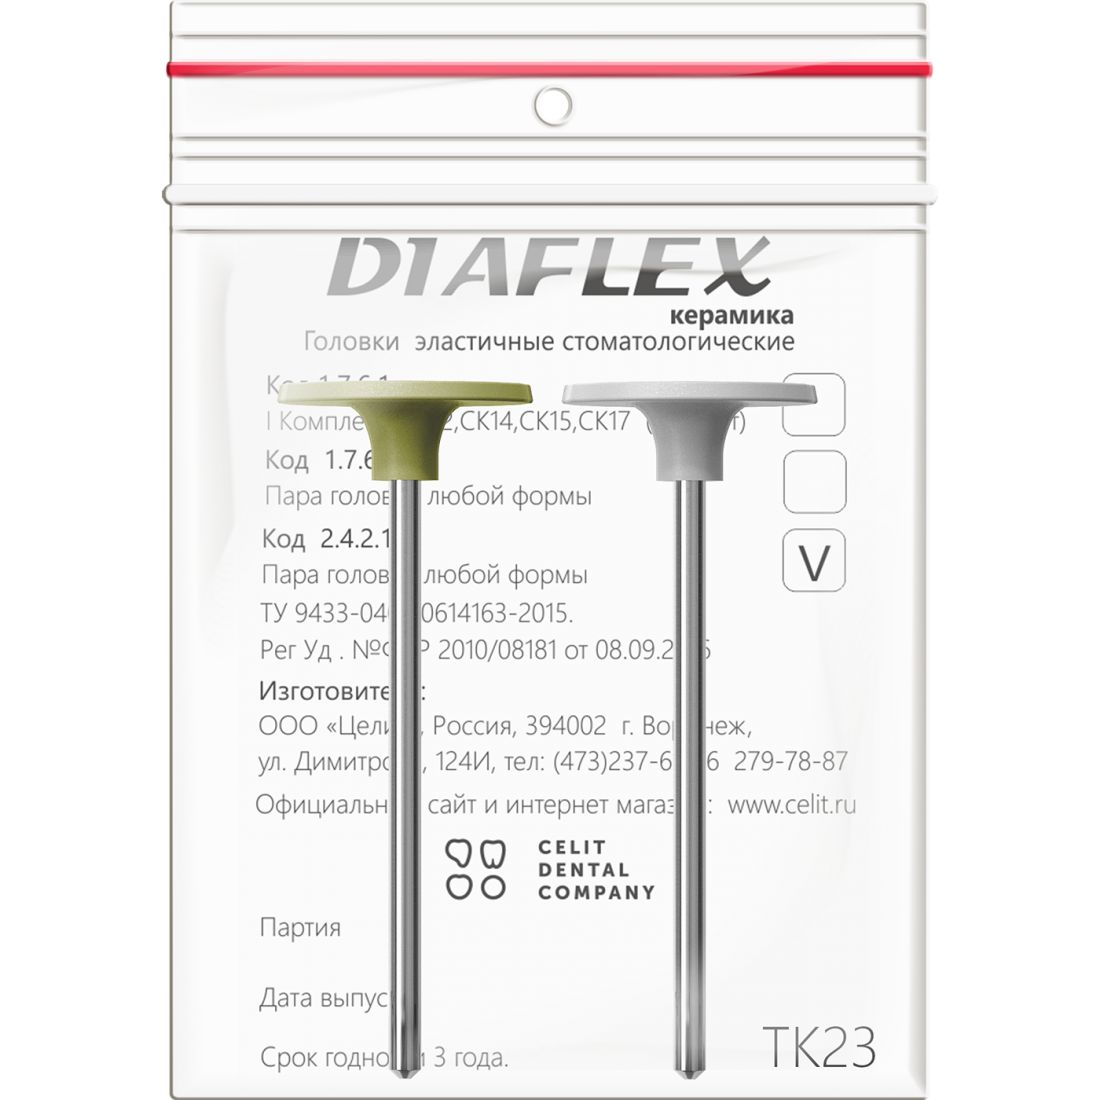 Diaflex Керамика ТК23 - головки Диафлекс для обработки керамики (2шт)